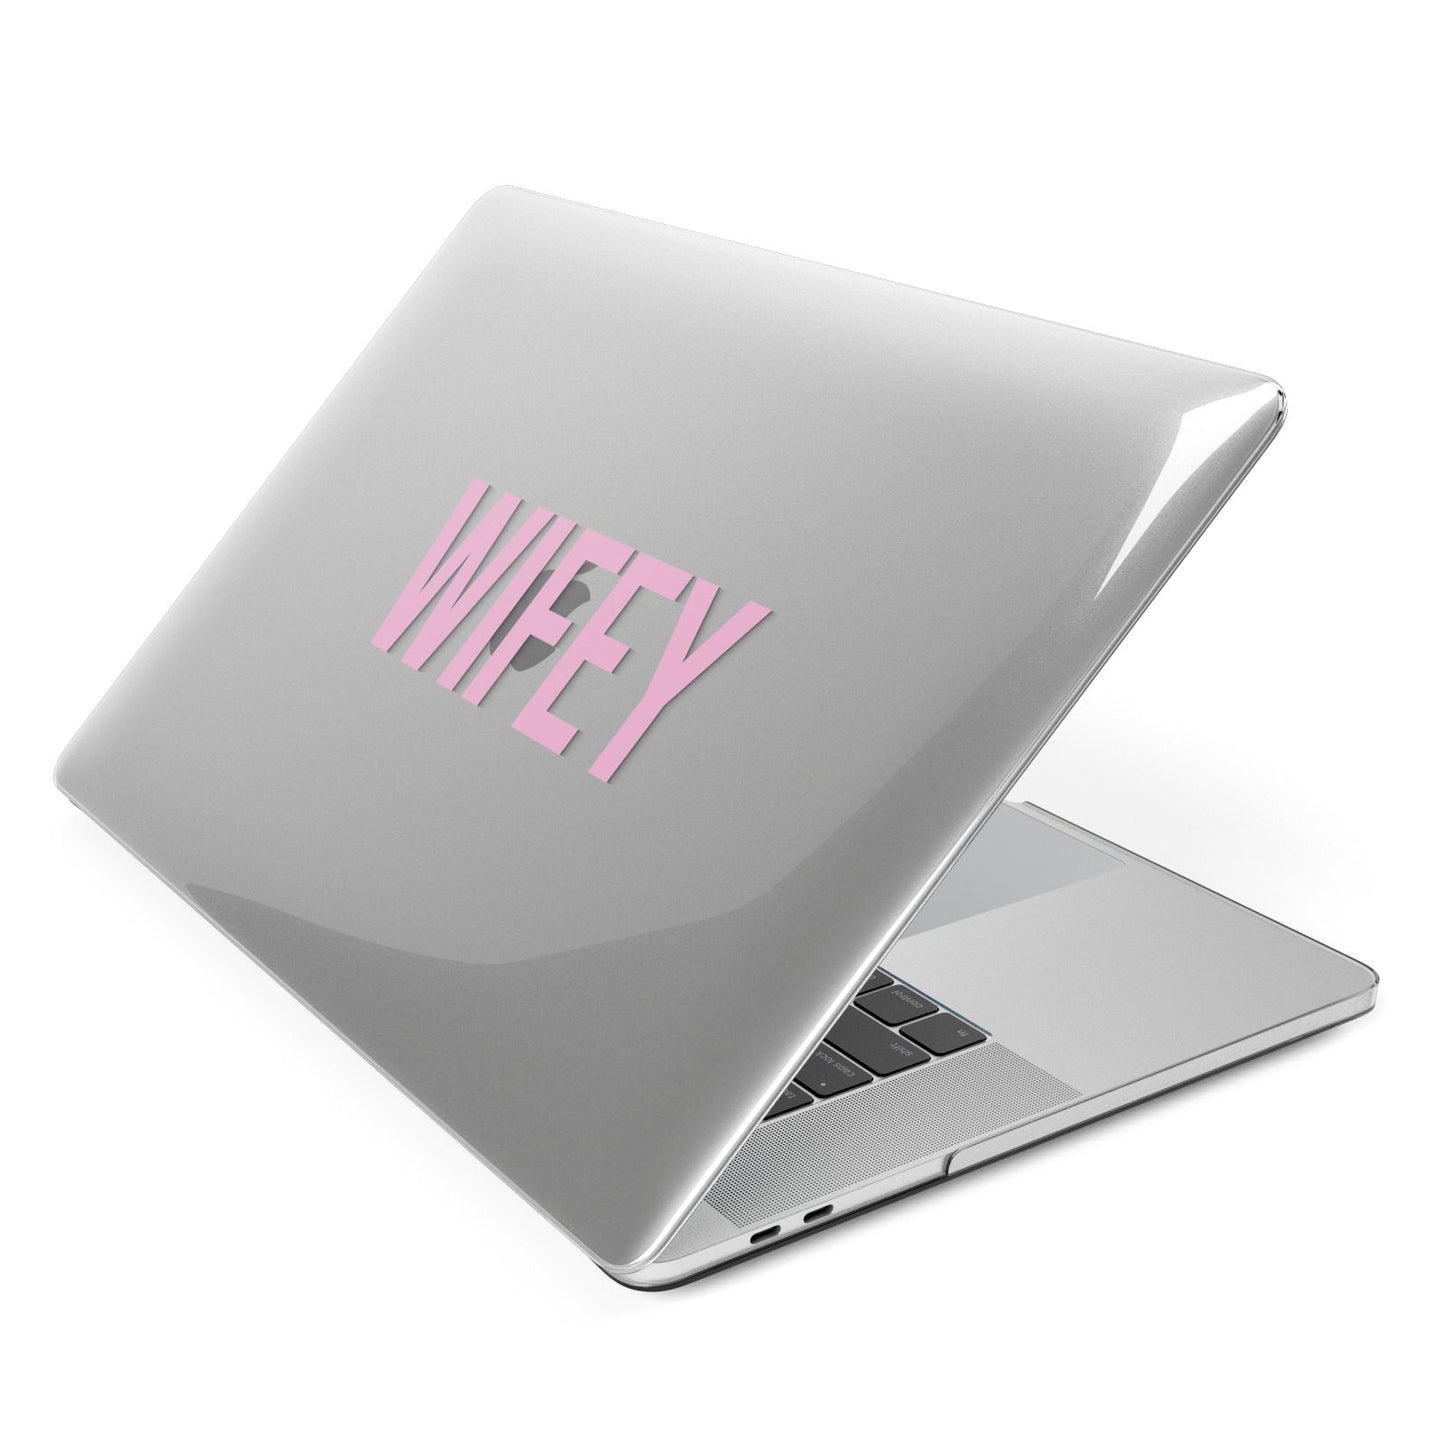 Wifey Pink Apple MacBook Case Side View